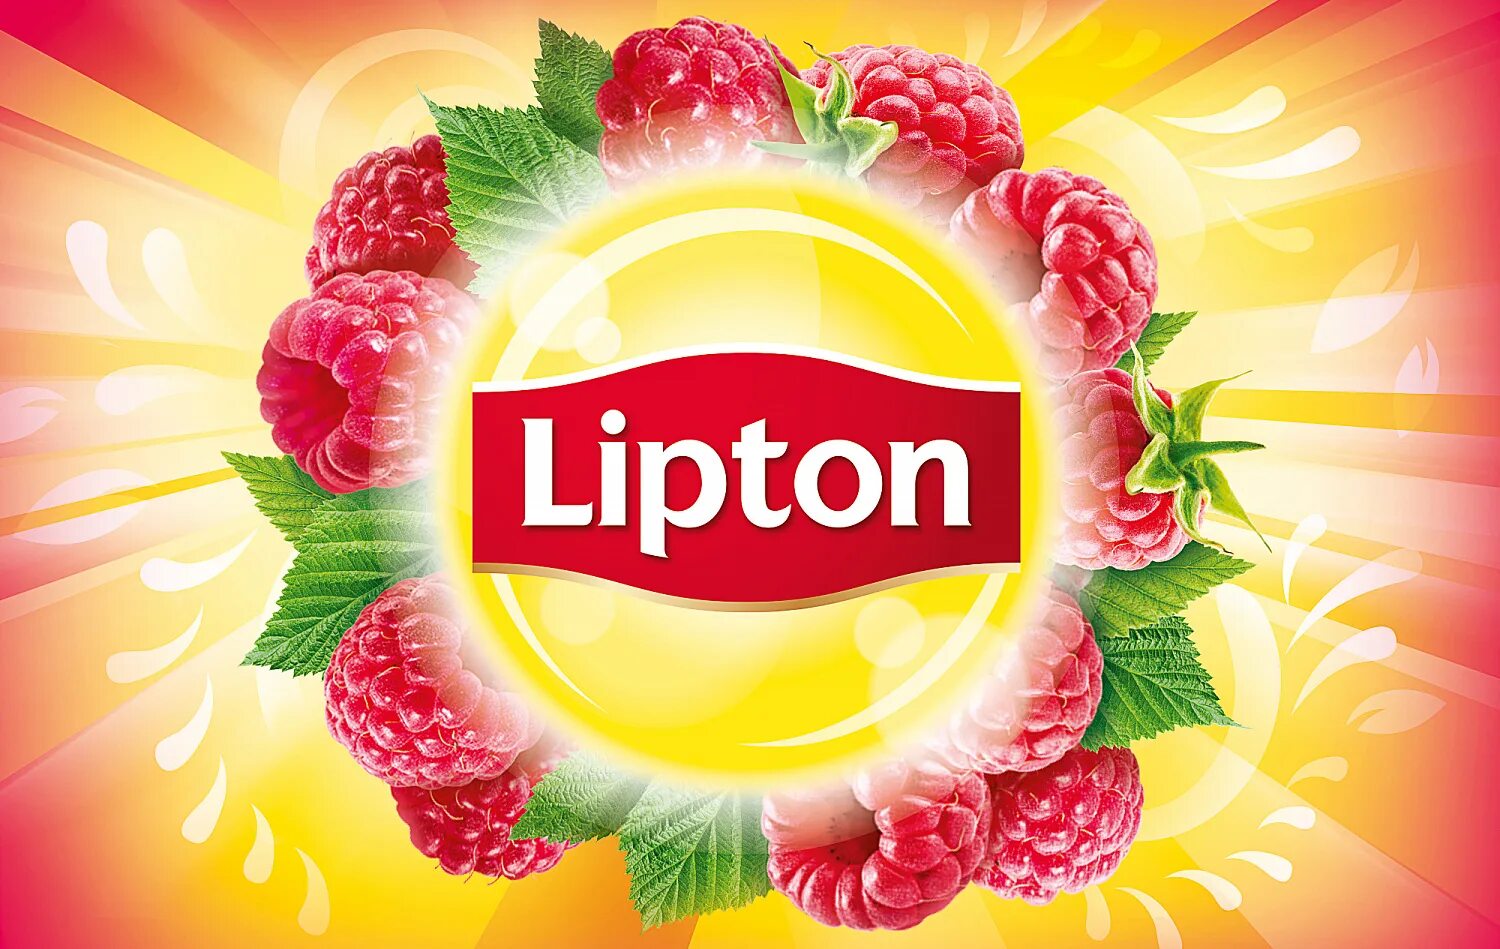 Без липтона. Логотип ЛИПТОНА. Холодный чай Липтон логотип. Чай Липтон логотип. Холодный зеленый чай Липтон этикетка.